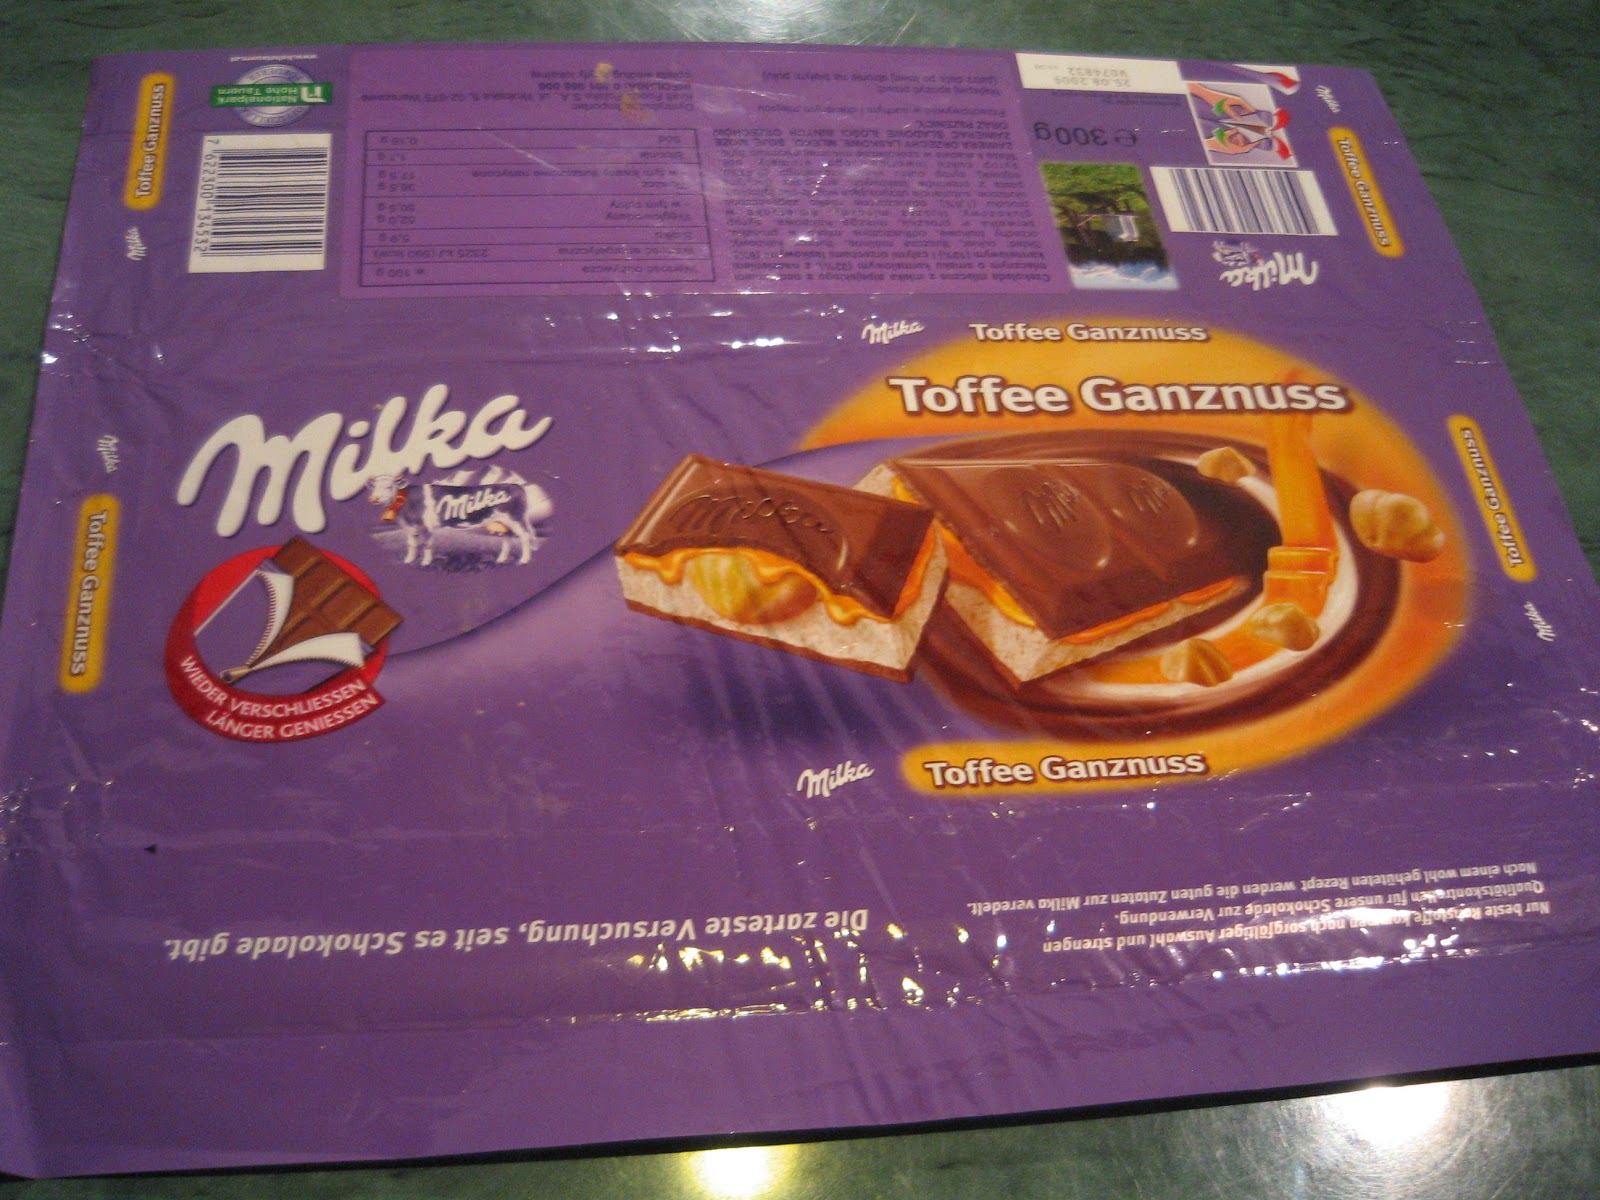 Milka: Milka Toffee Ganznuss (300g)